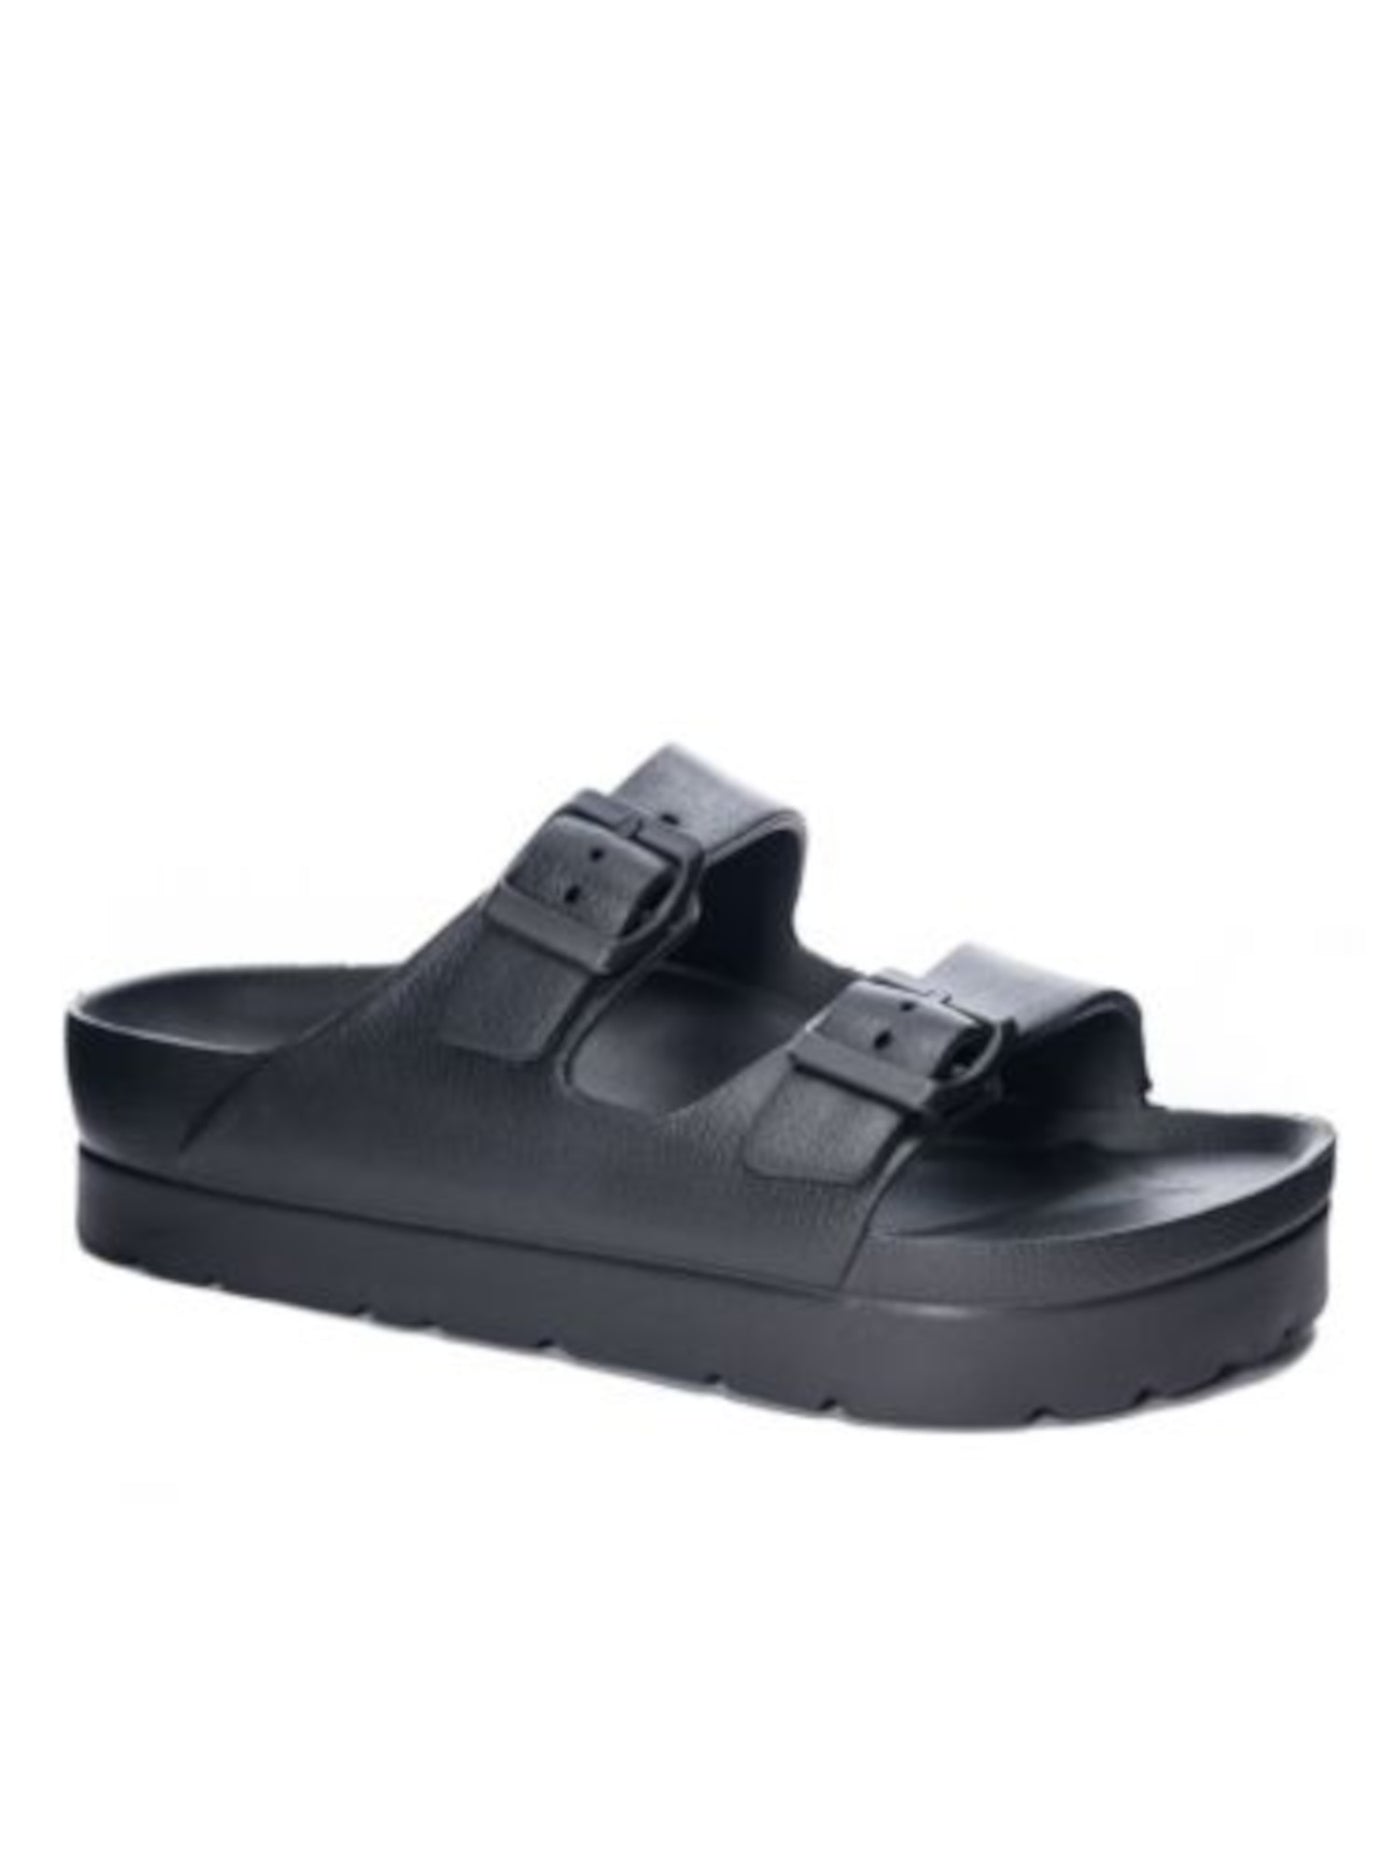 DIRTY LAUNDRY Womens Black Buckle Accent Comfort Genavive Round Toe Platform Slip On Slide Sandals Shoes 9